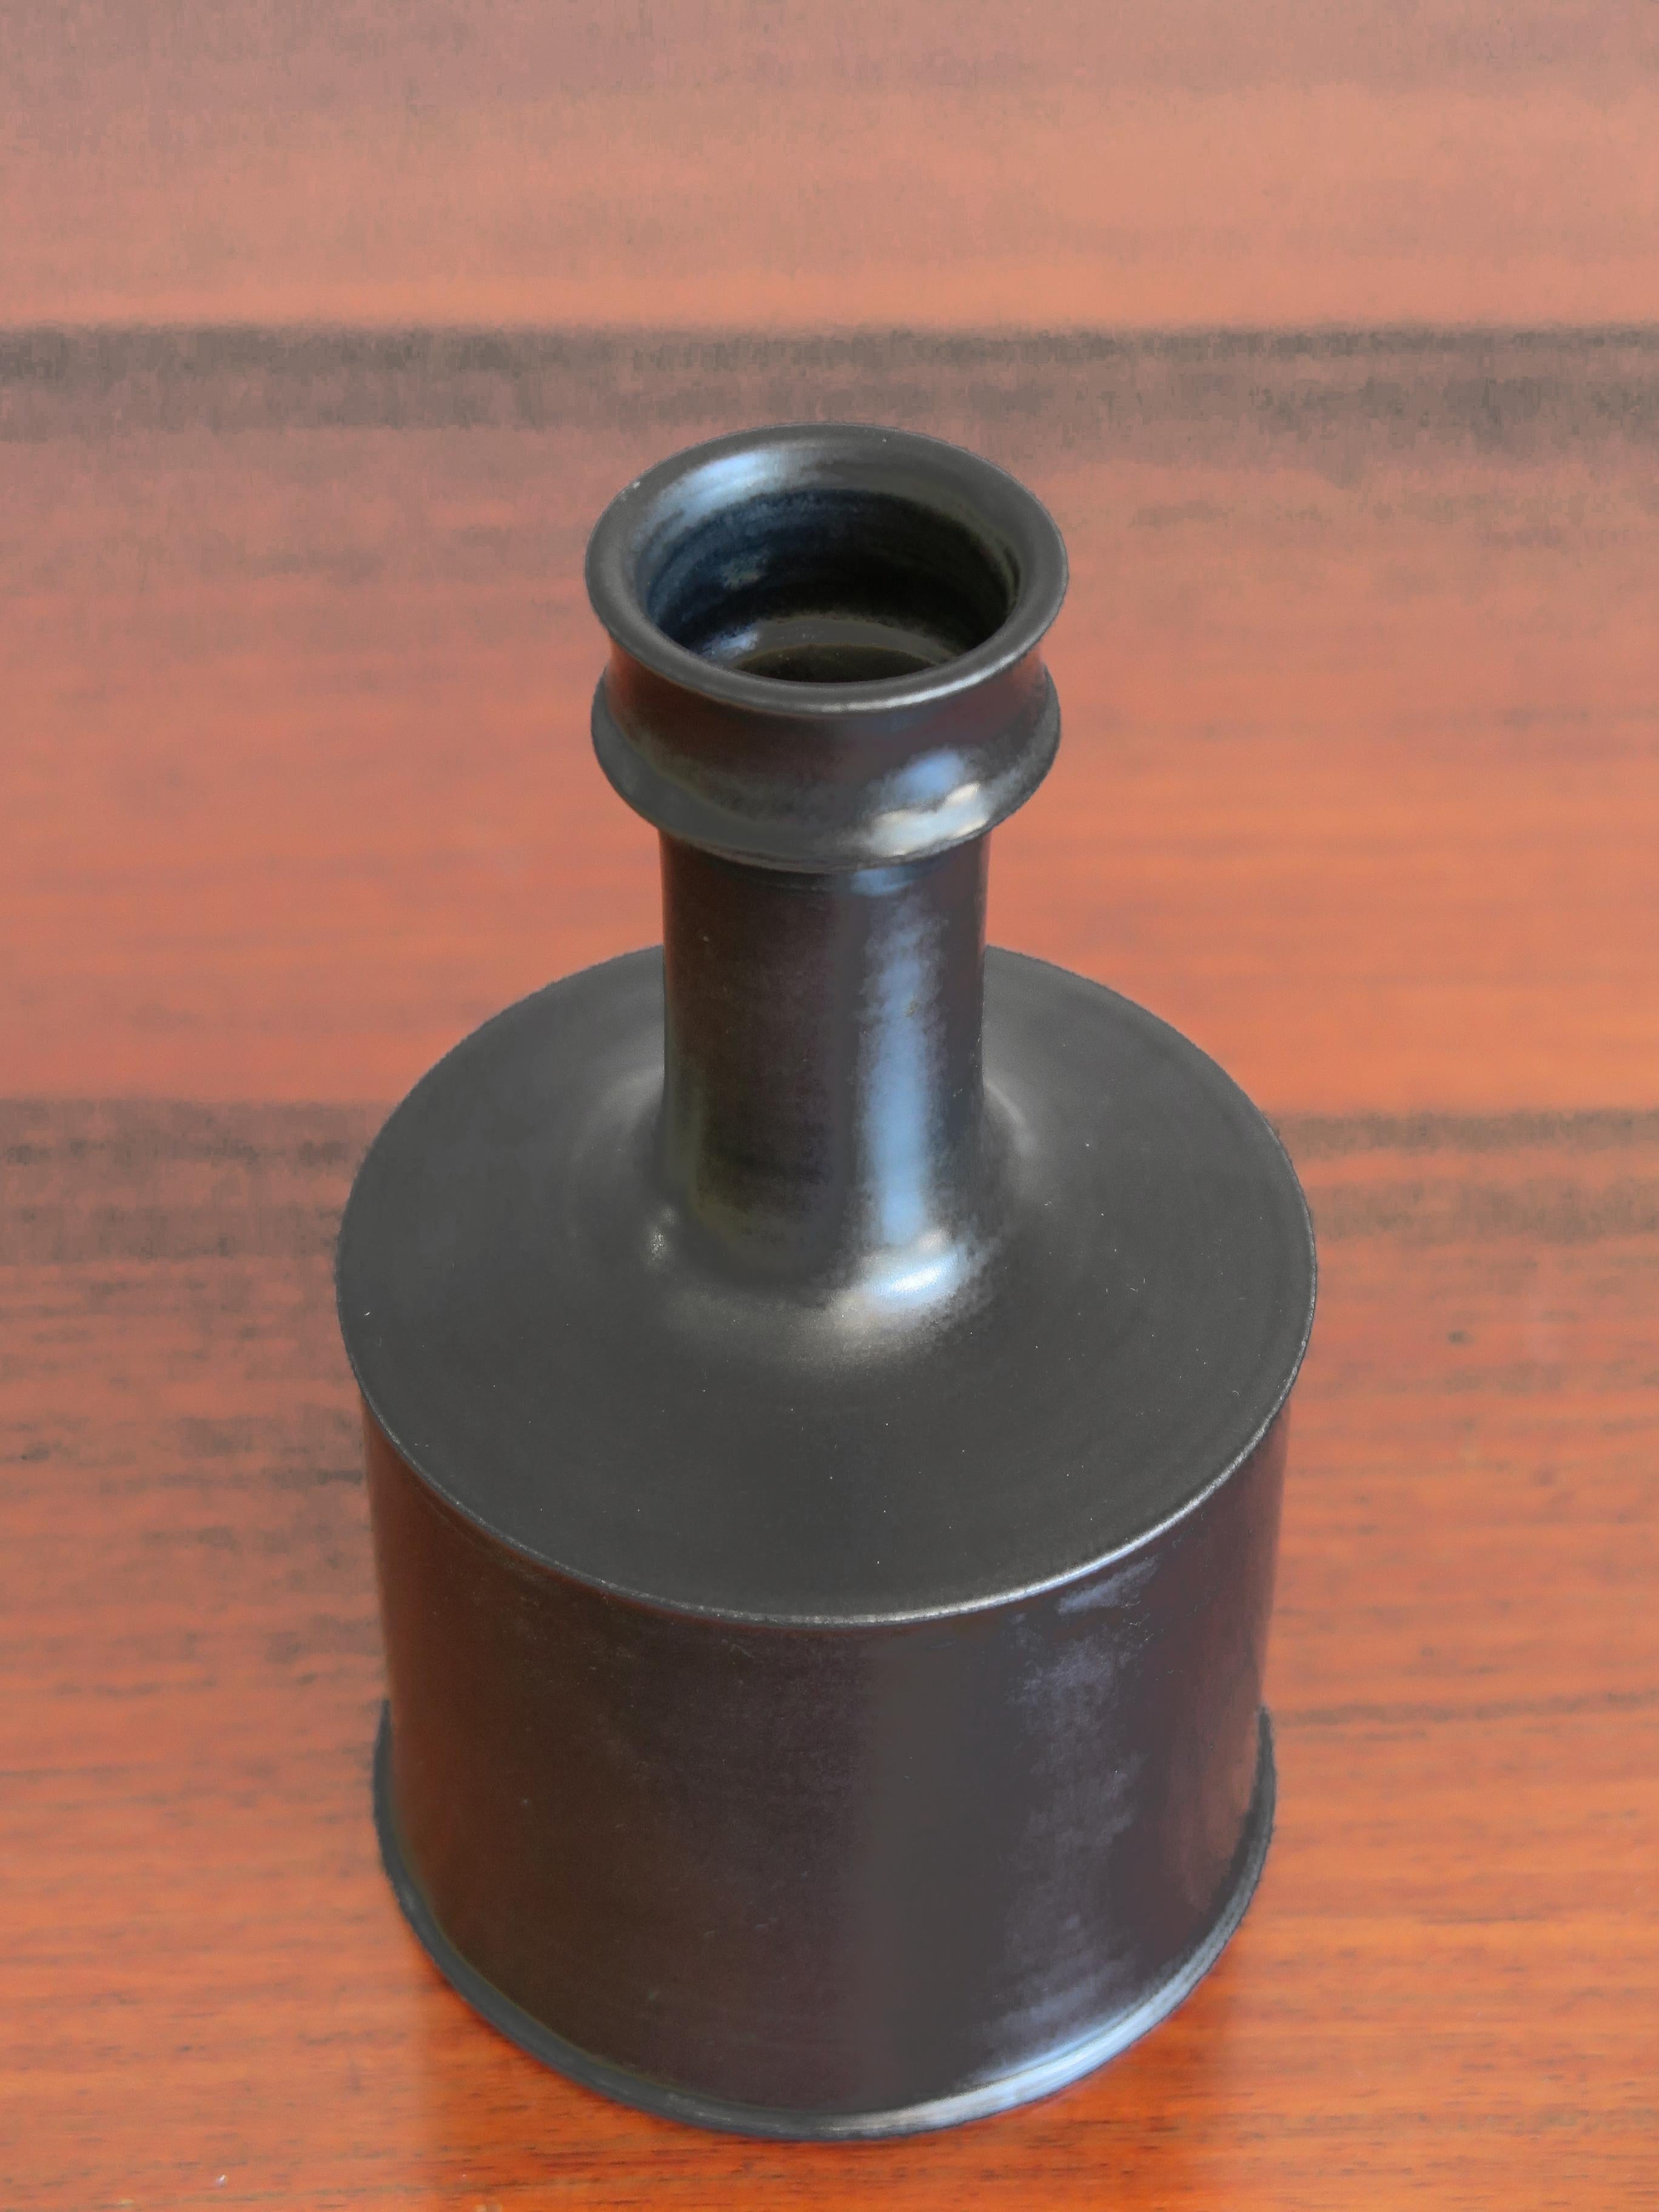 Italian black ceramic vase bottle designed by Italian artist Franco Bucci, Pesaro; black glazed ceramic, marked with a graphic symbol under the base, 1970s.